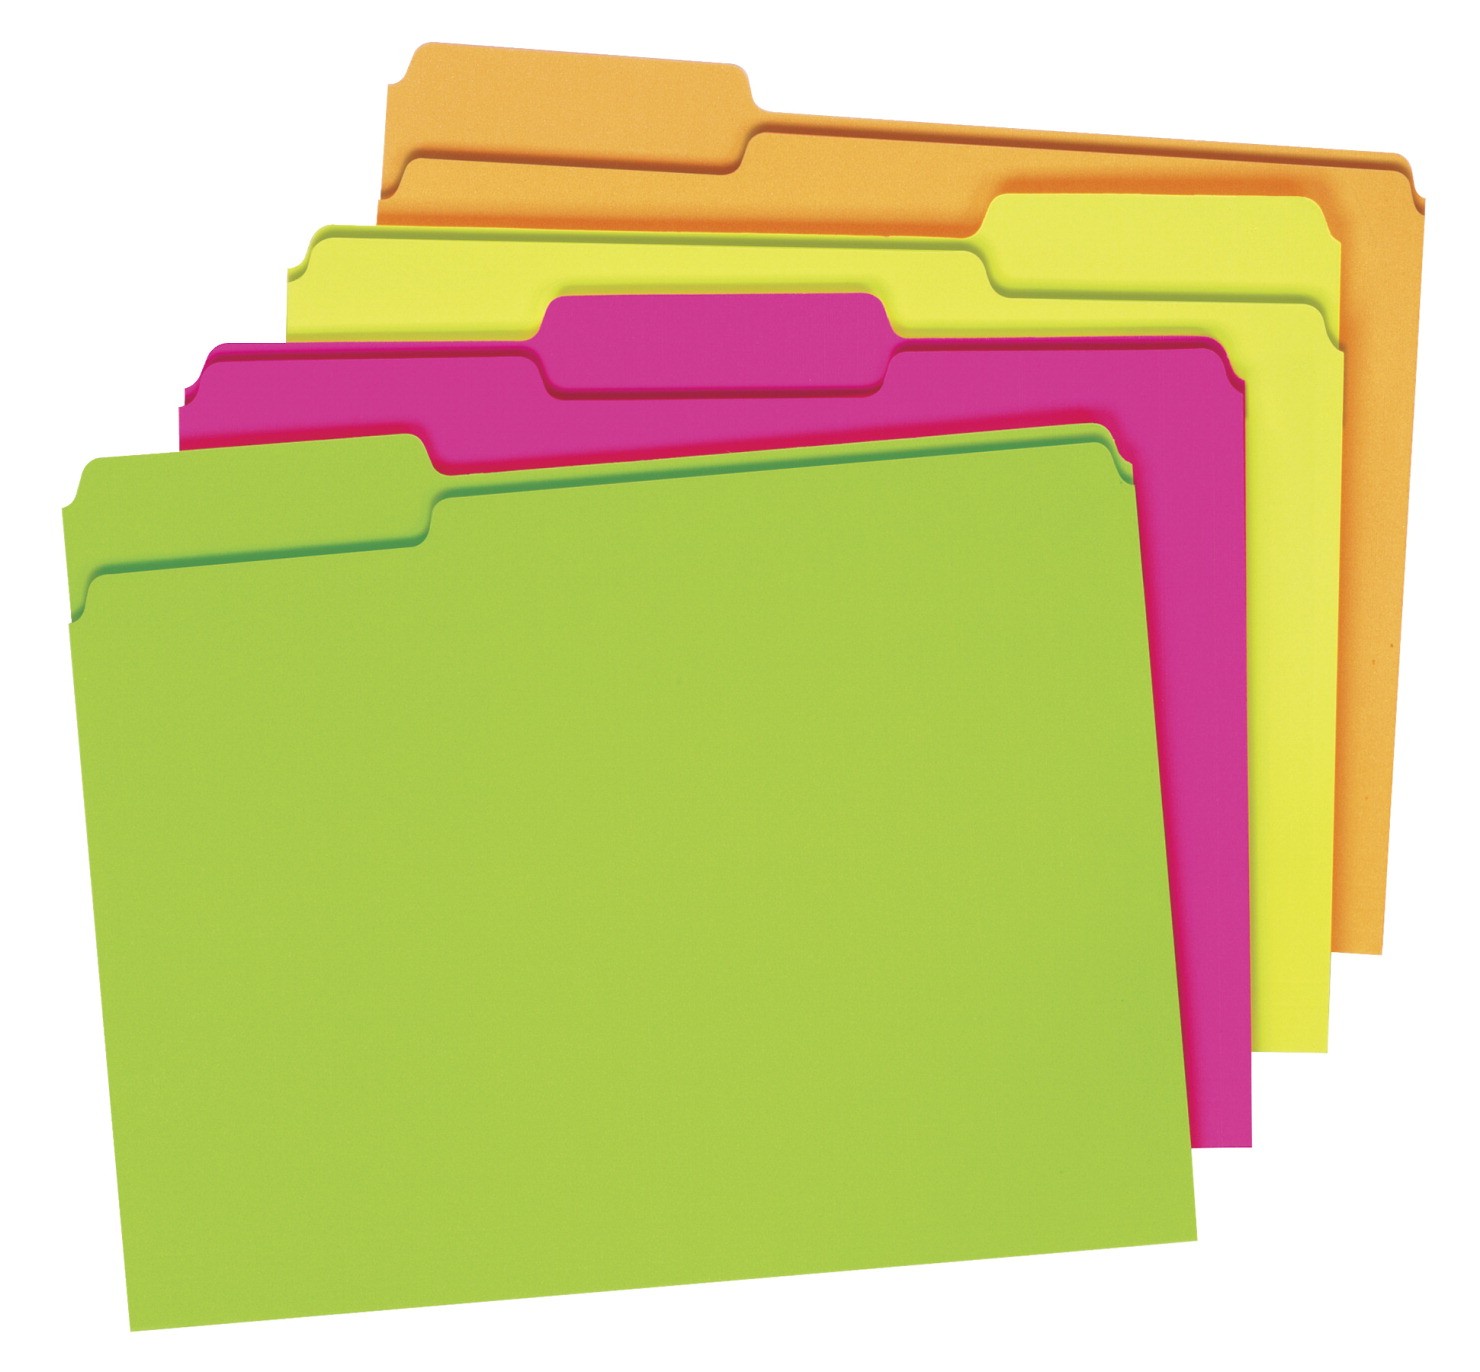 Pendaflex Glow File Folders, 3 Tab, Assorted Colors, Pack of 24